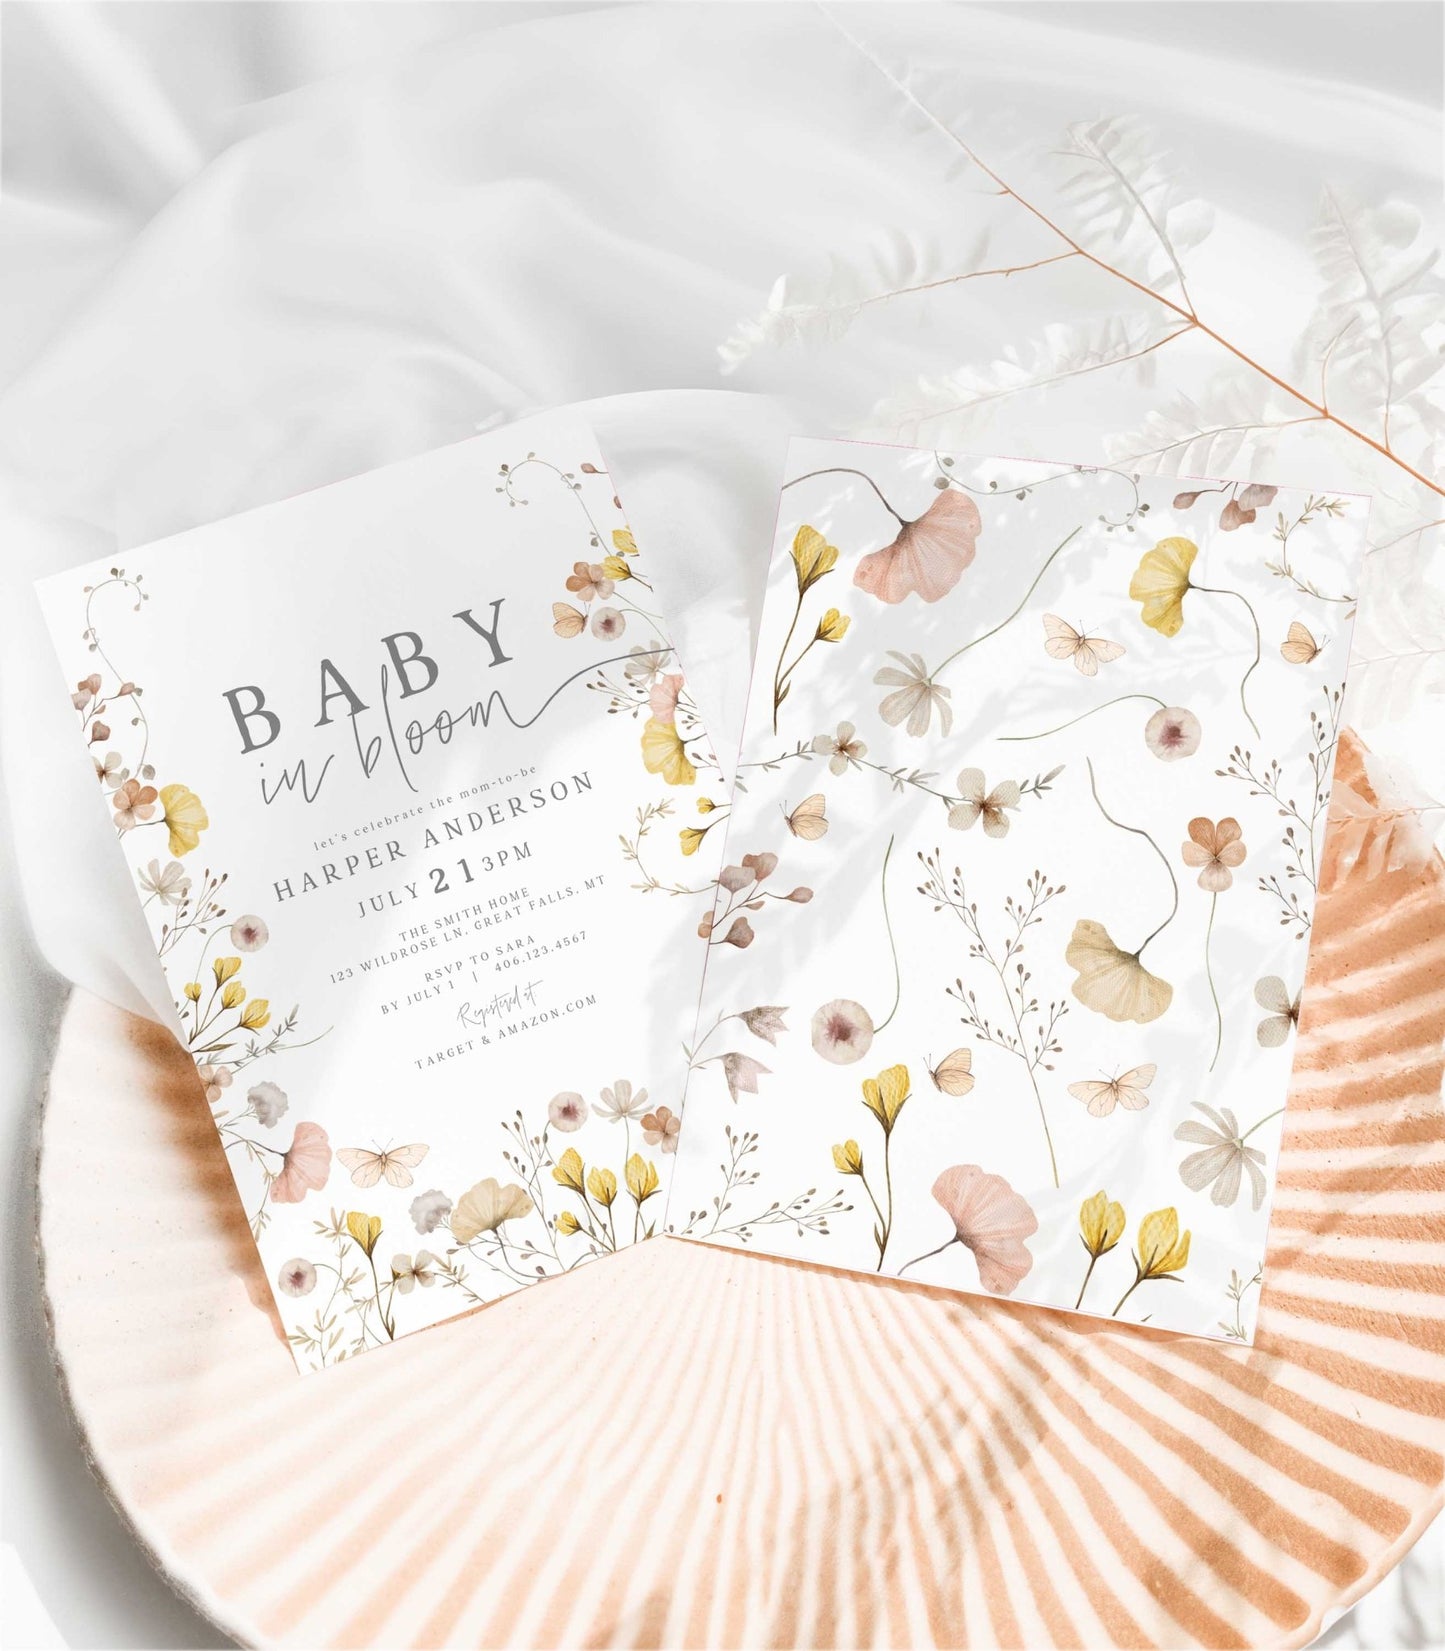 Baby In Bloom Baby Shower Invitation Template - High Peaks Studios